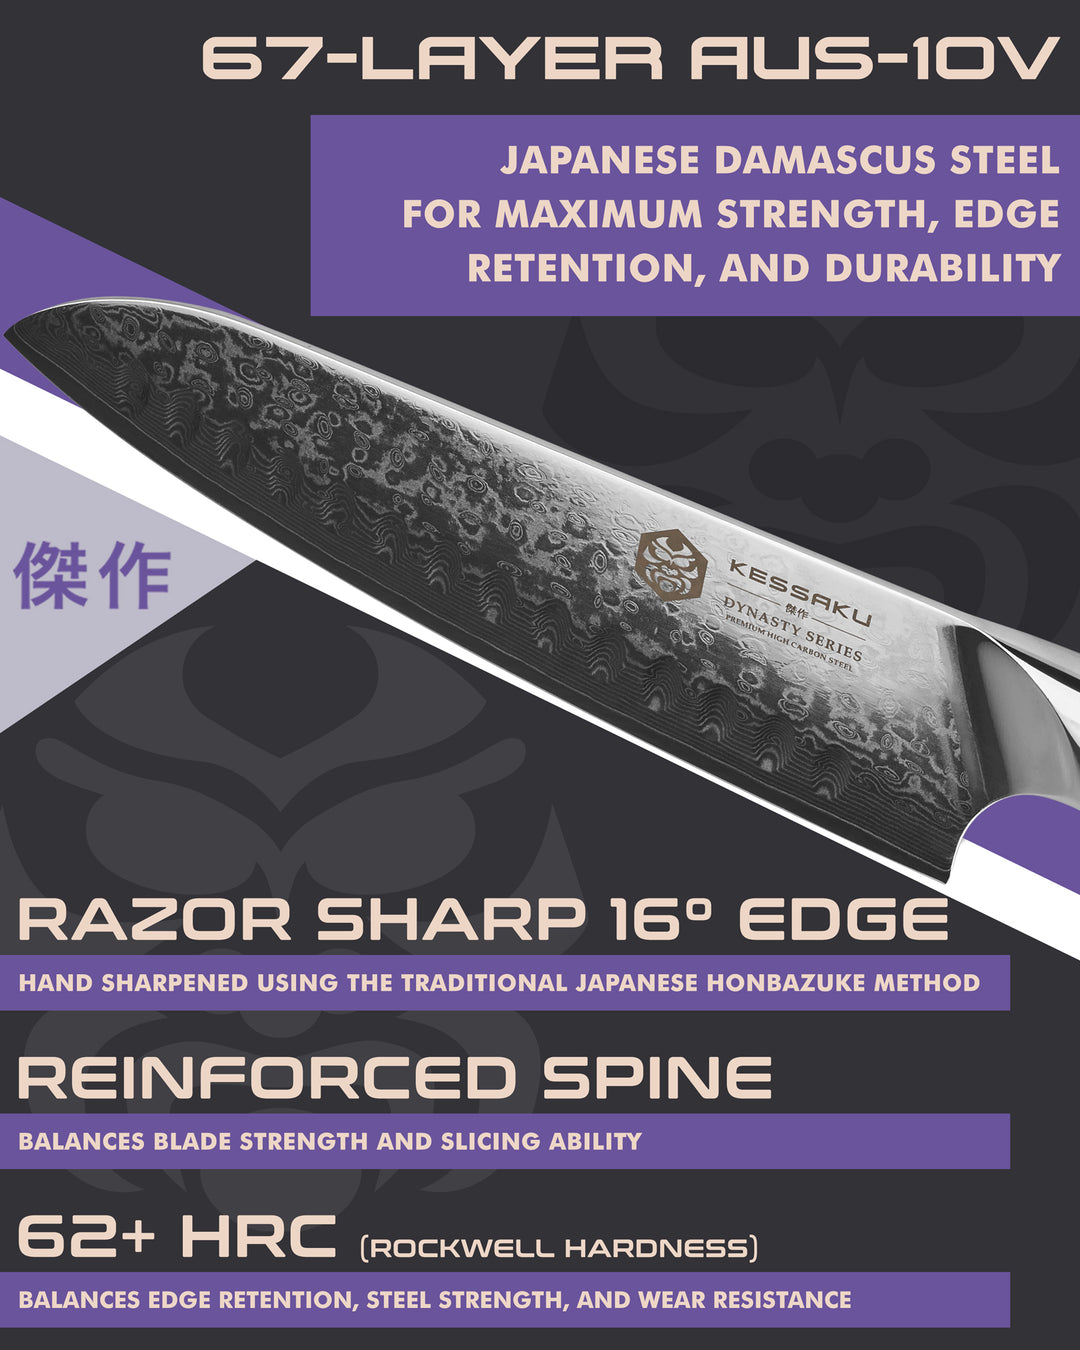 Kessaku Dynasty Damascus Santoku Knife blade features: 67-Layer AUS 10V steel, 62+ HRC, 16 degree edge, reinforced spine